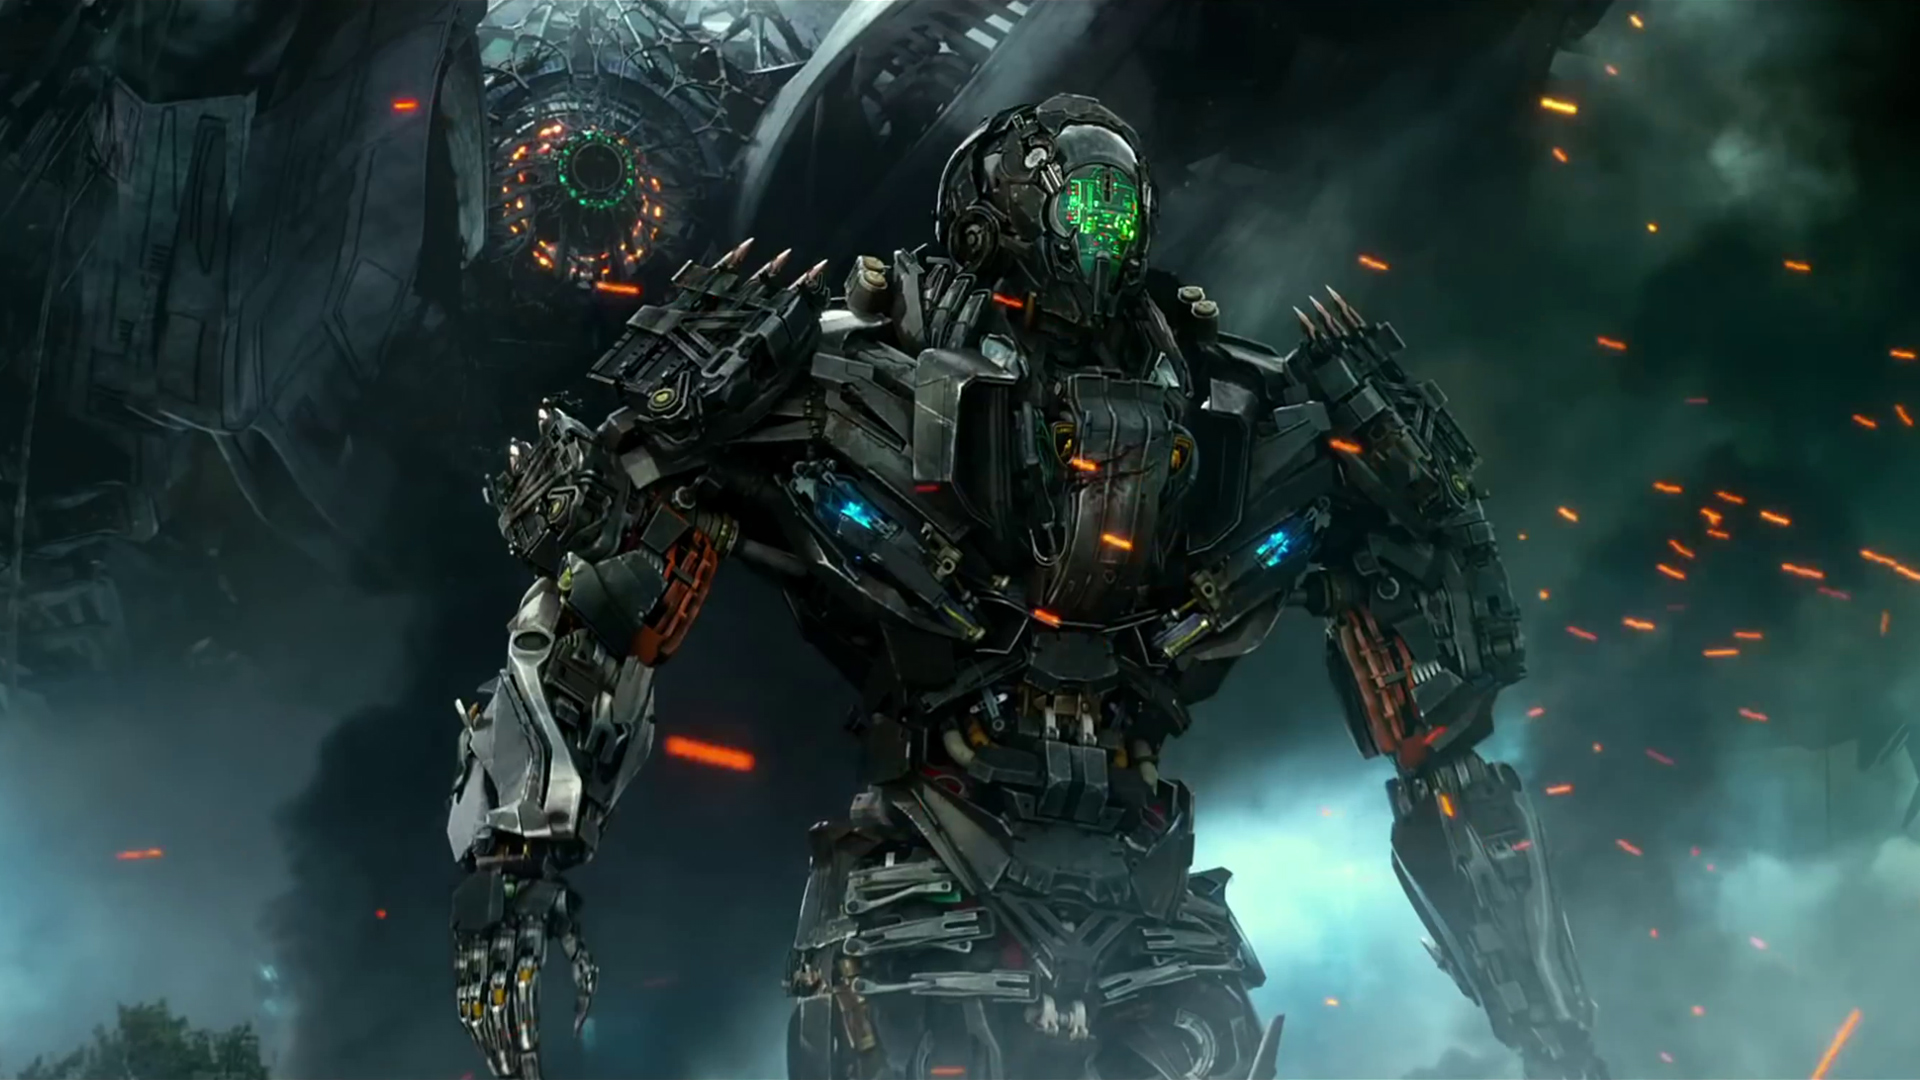 lockdown transformers age of extinction 2014 movie action adventure